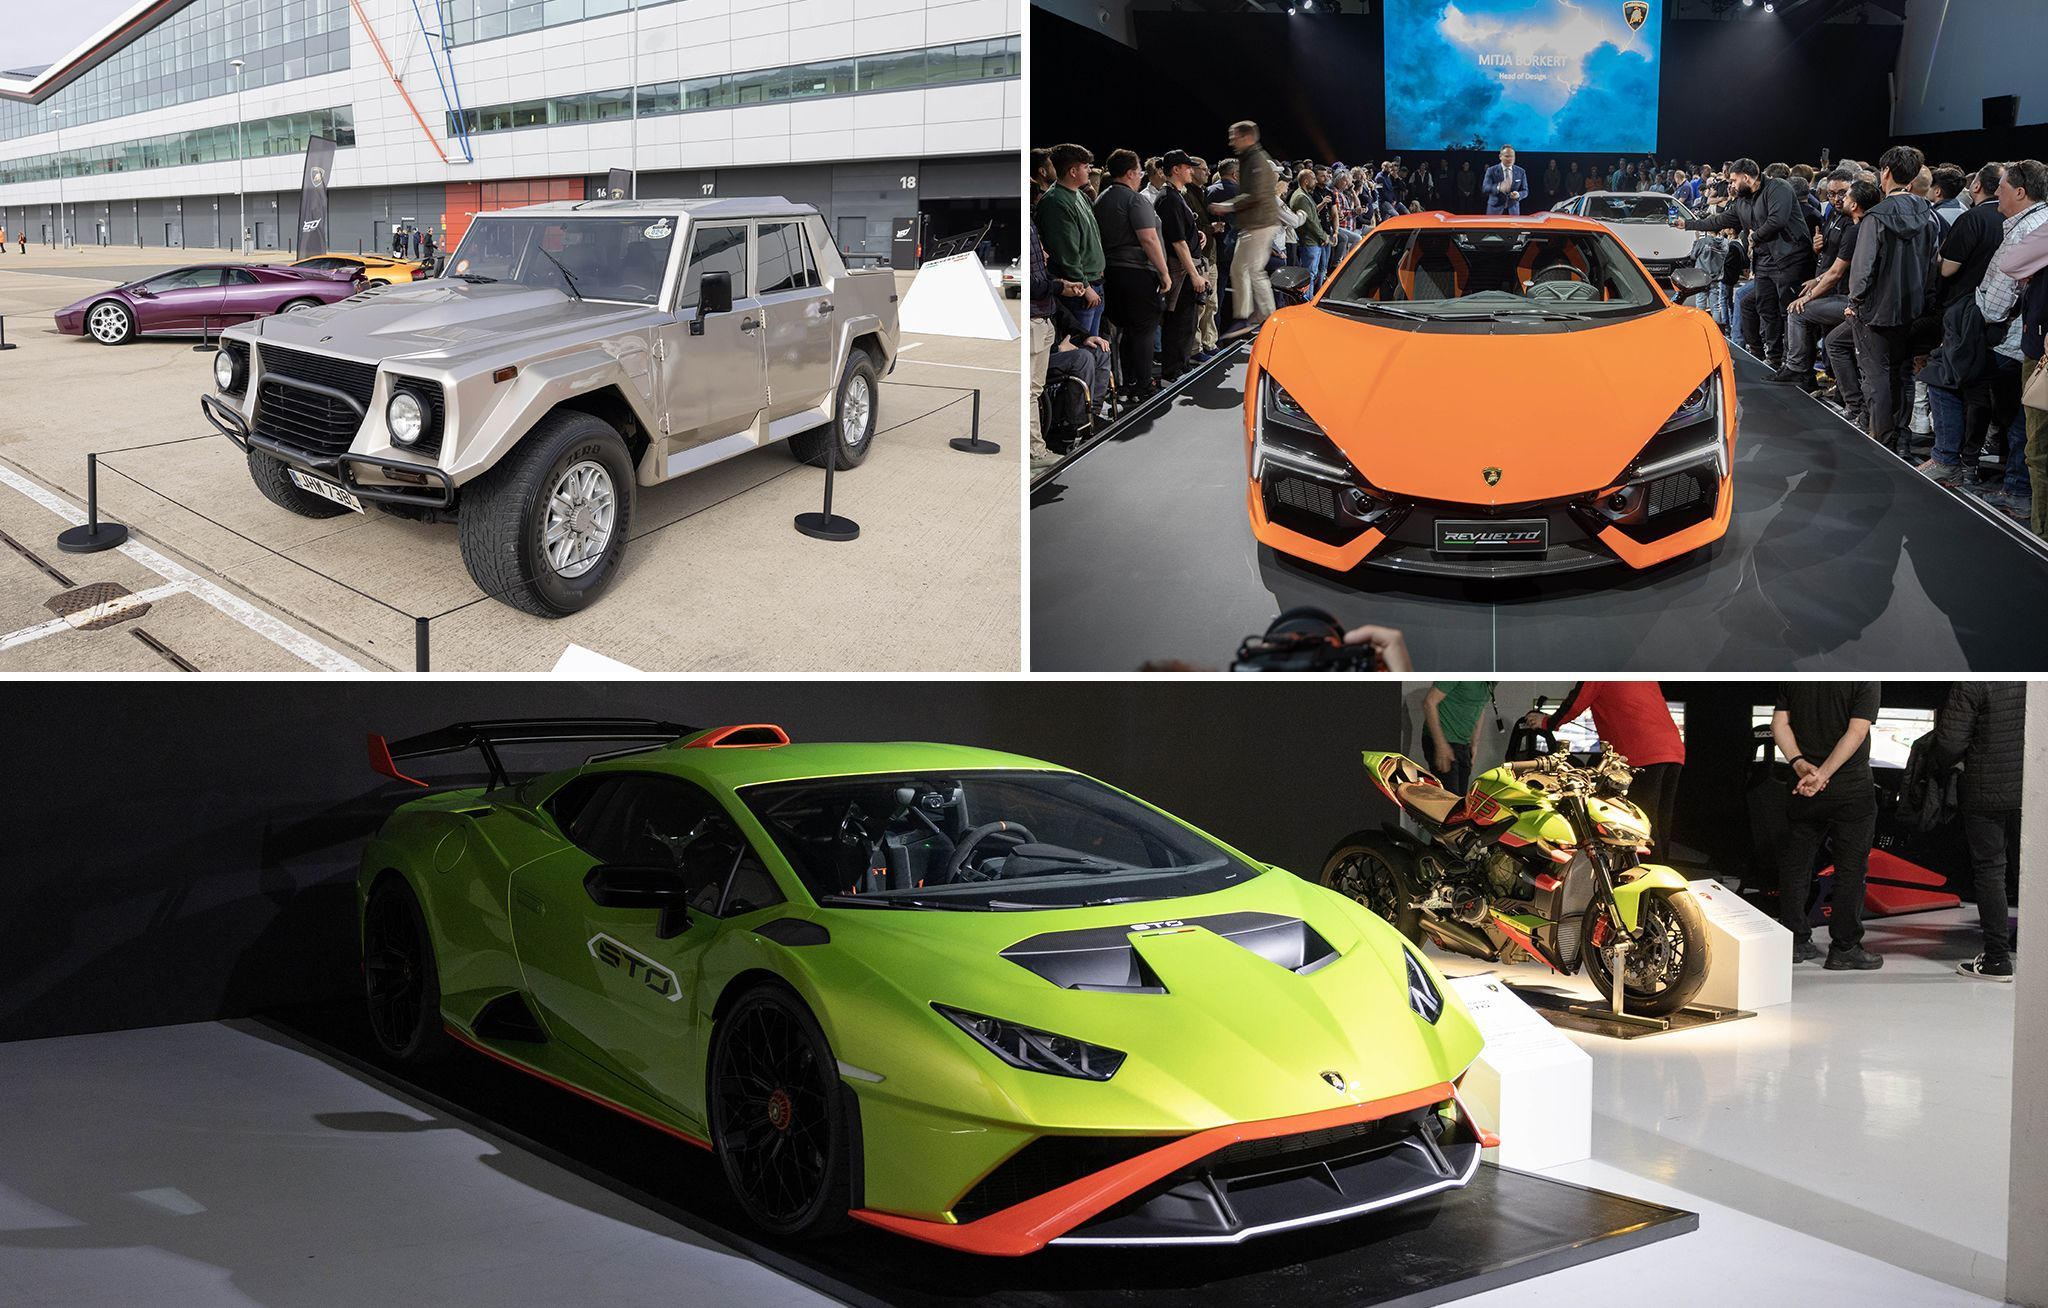 Automobili Lamborghini’s 60th anniversary - celebrated at Lamborghini Day UK